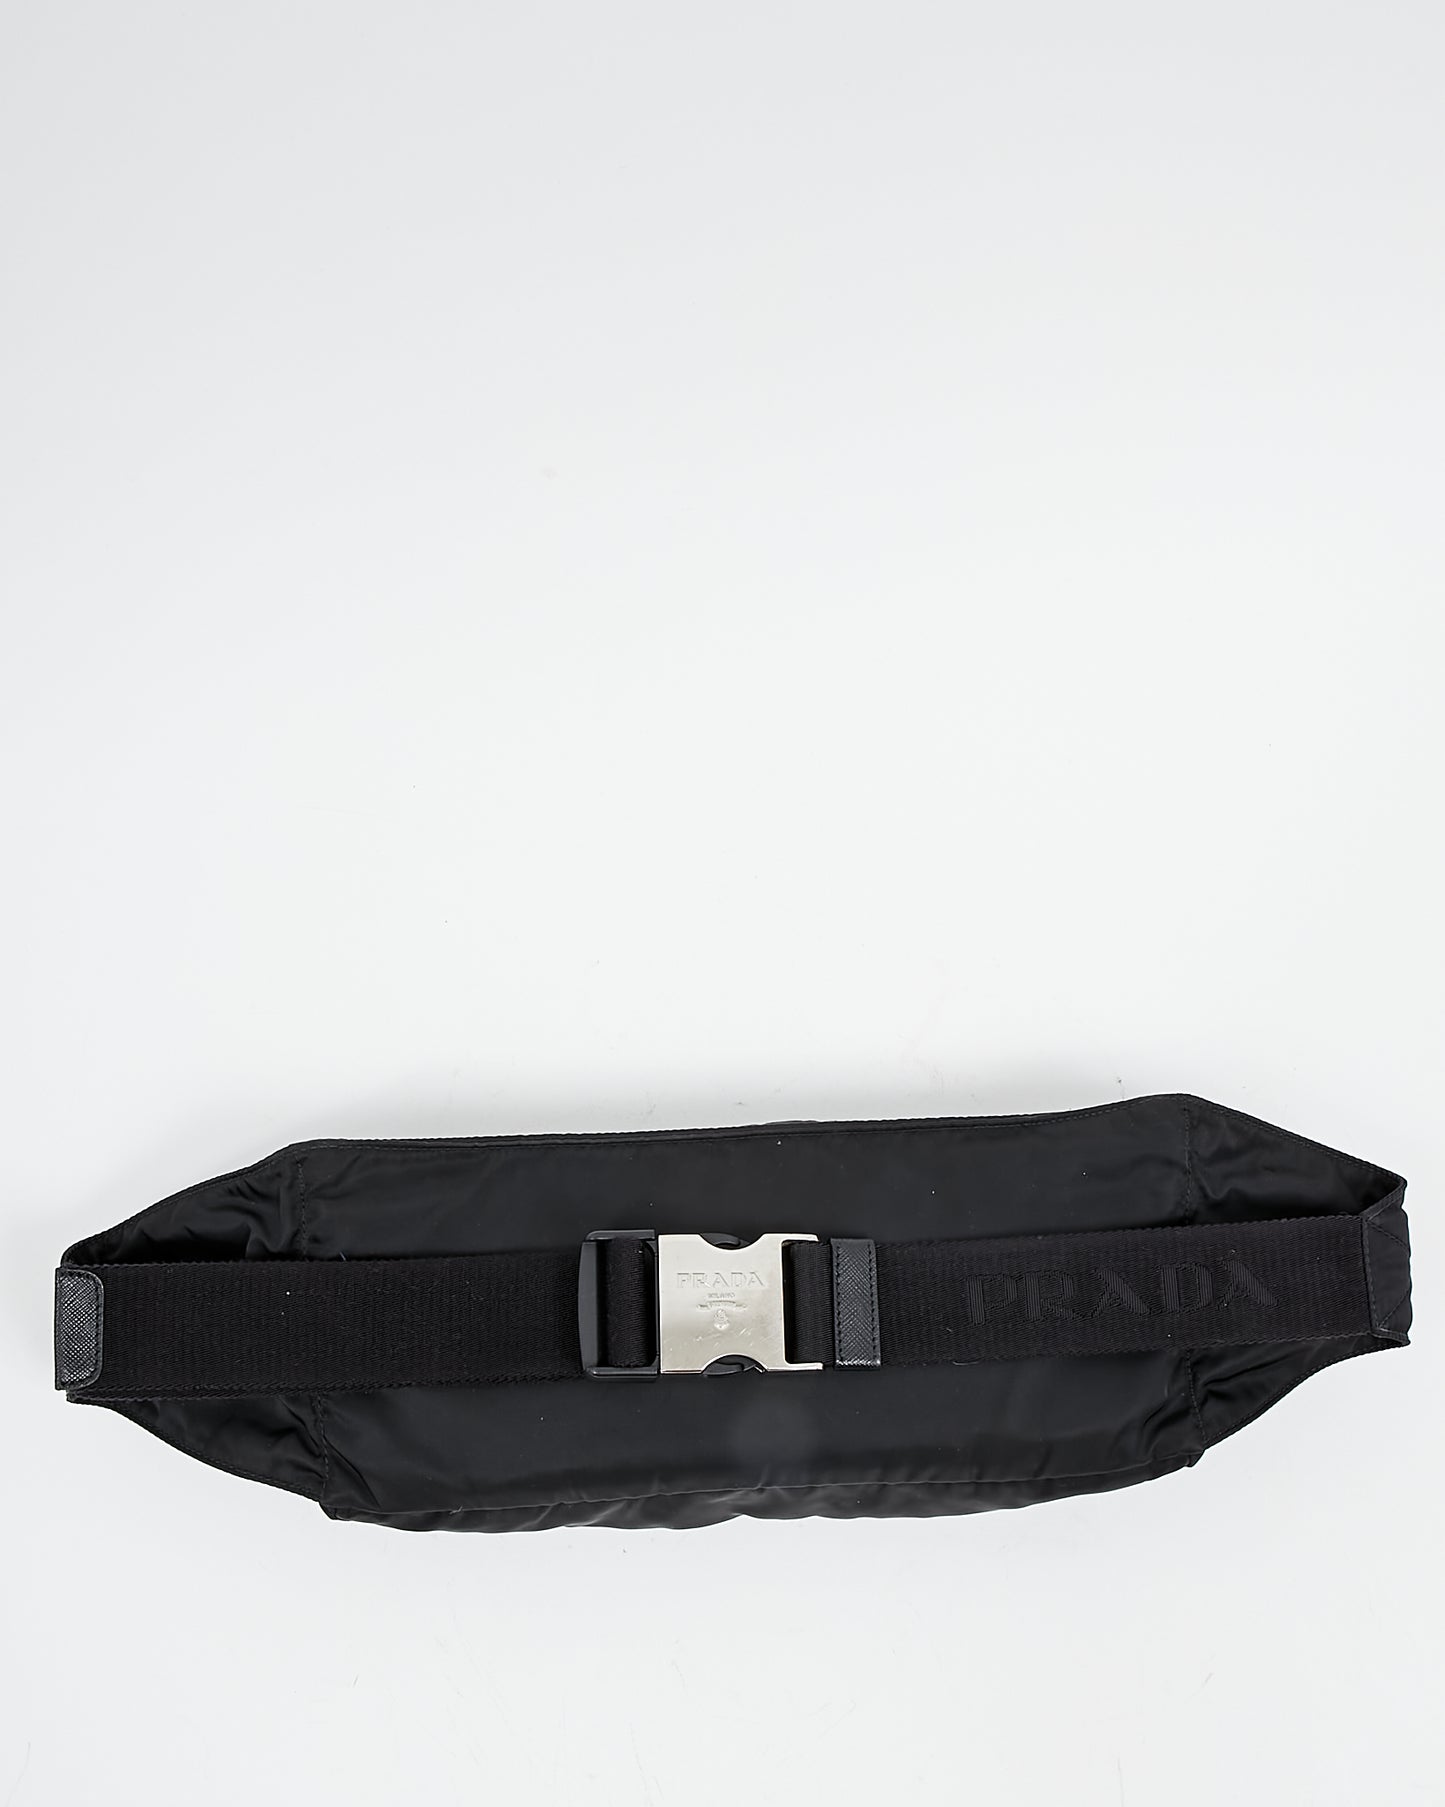 Prada Black Nylon Tessuto Belt Bag - S